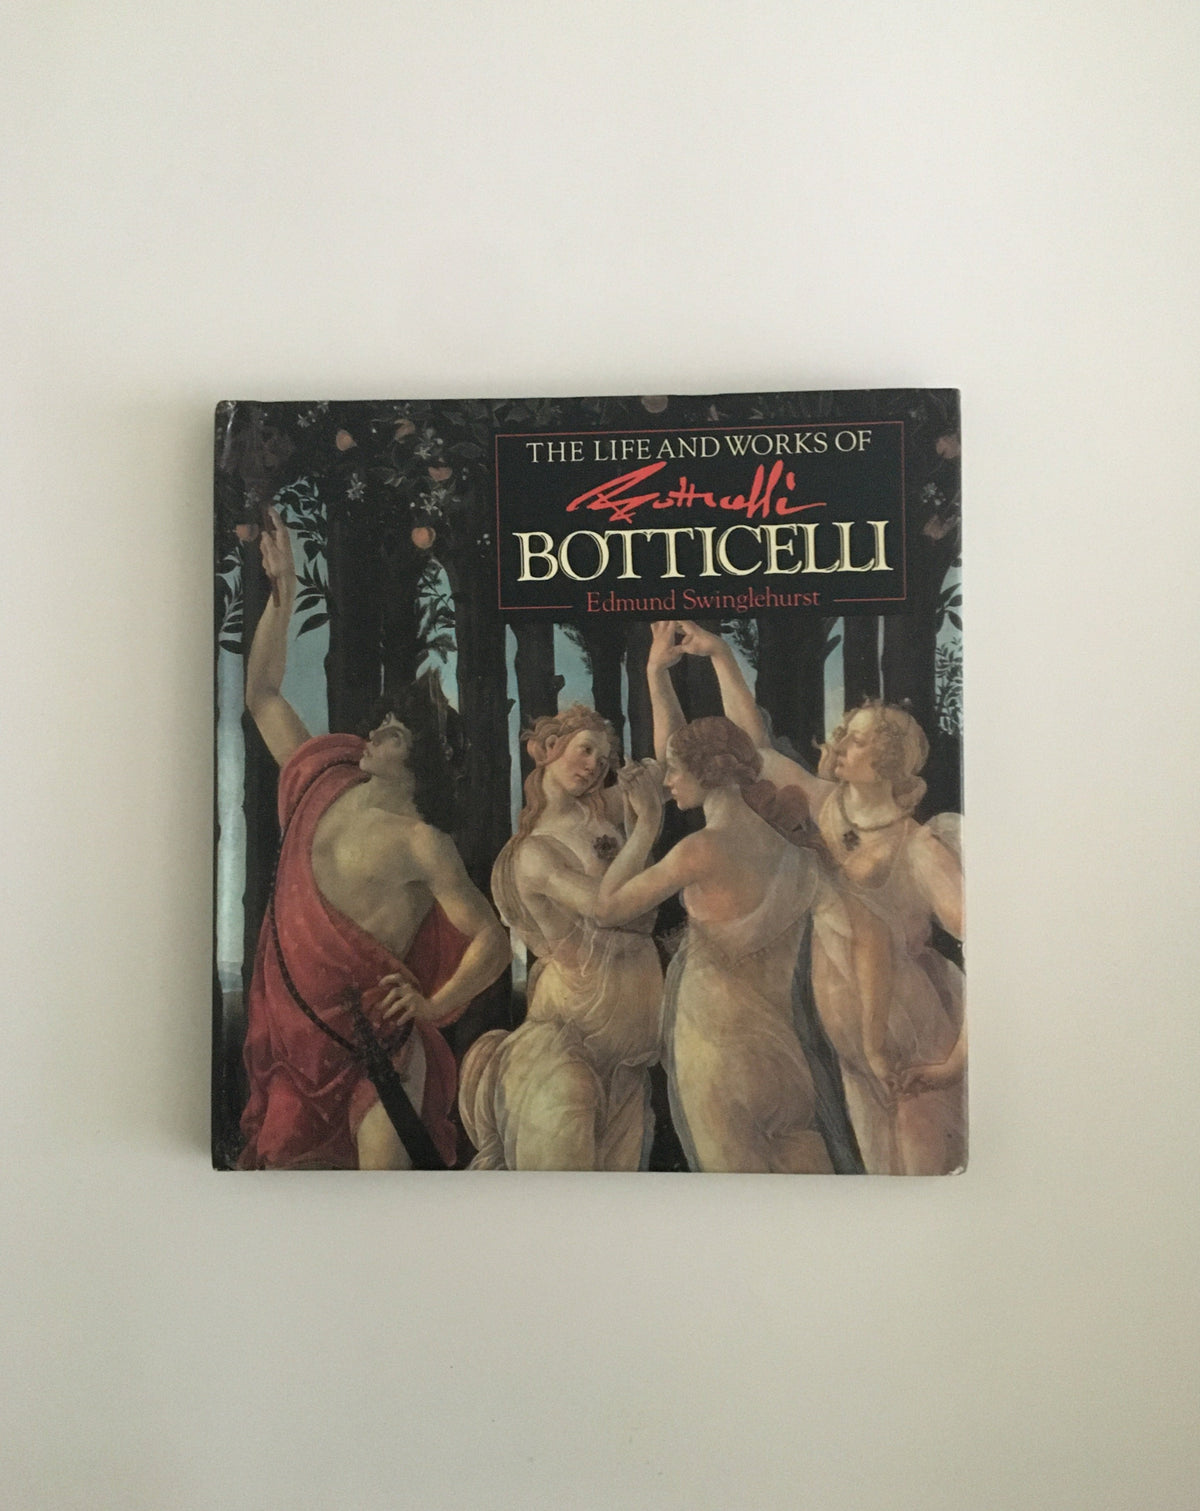 The Life and Works of Botticelli by Edmund Swinglehurst